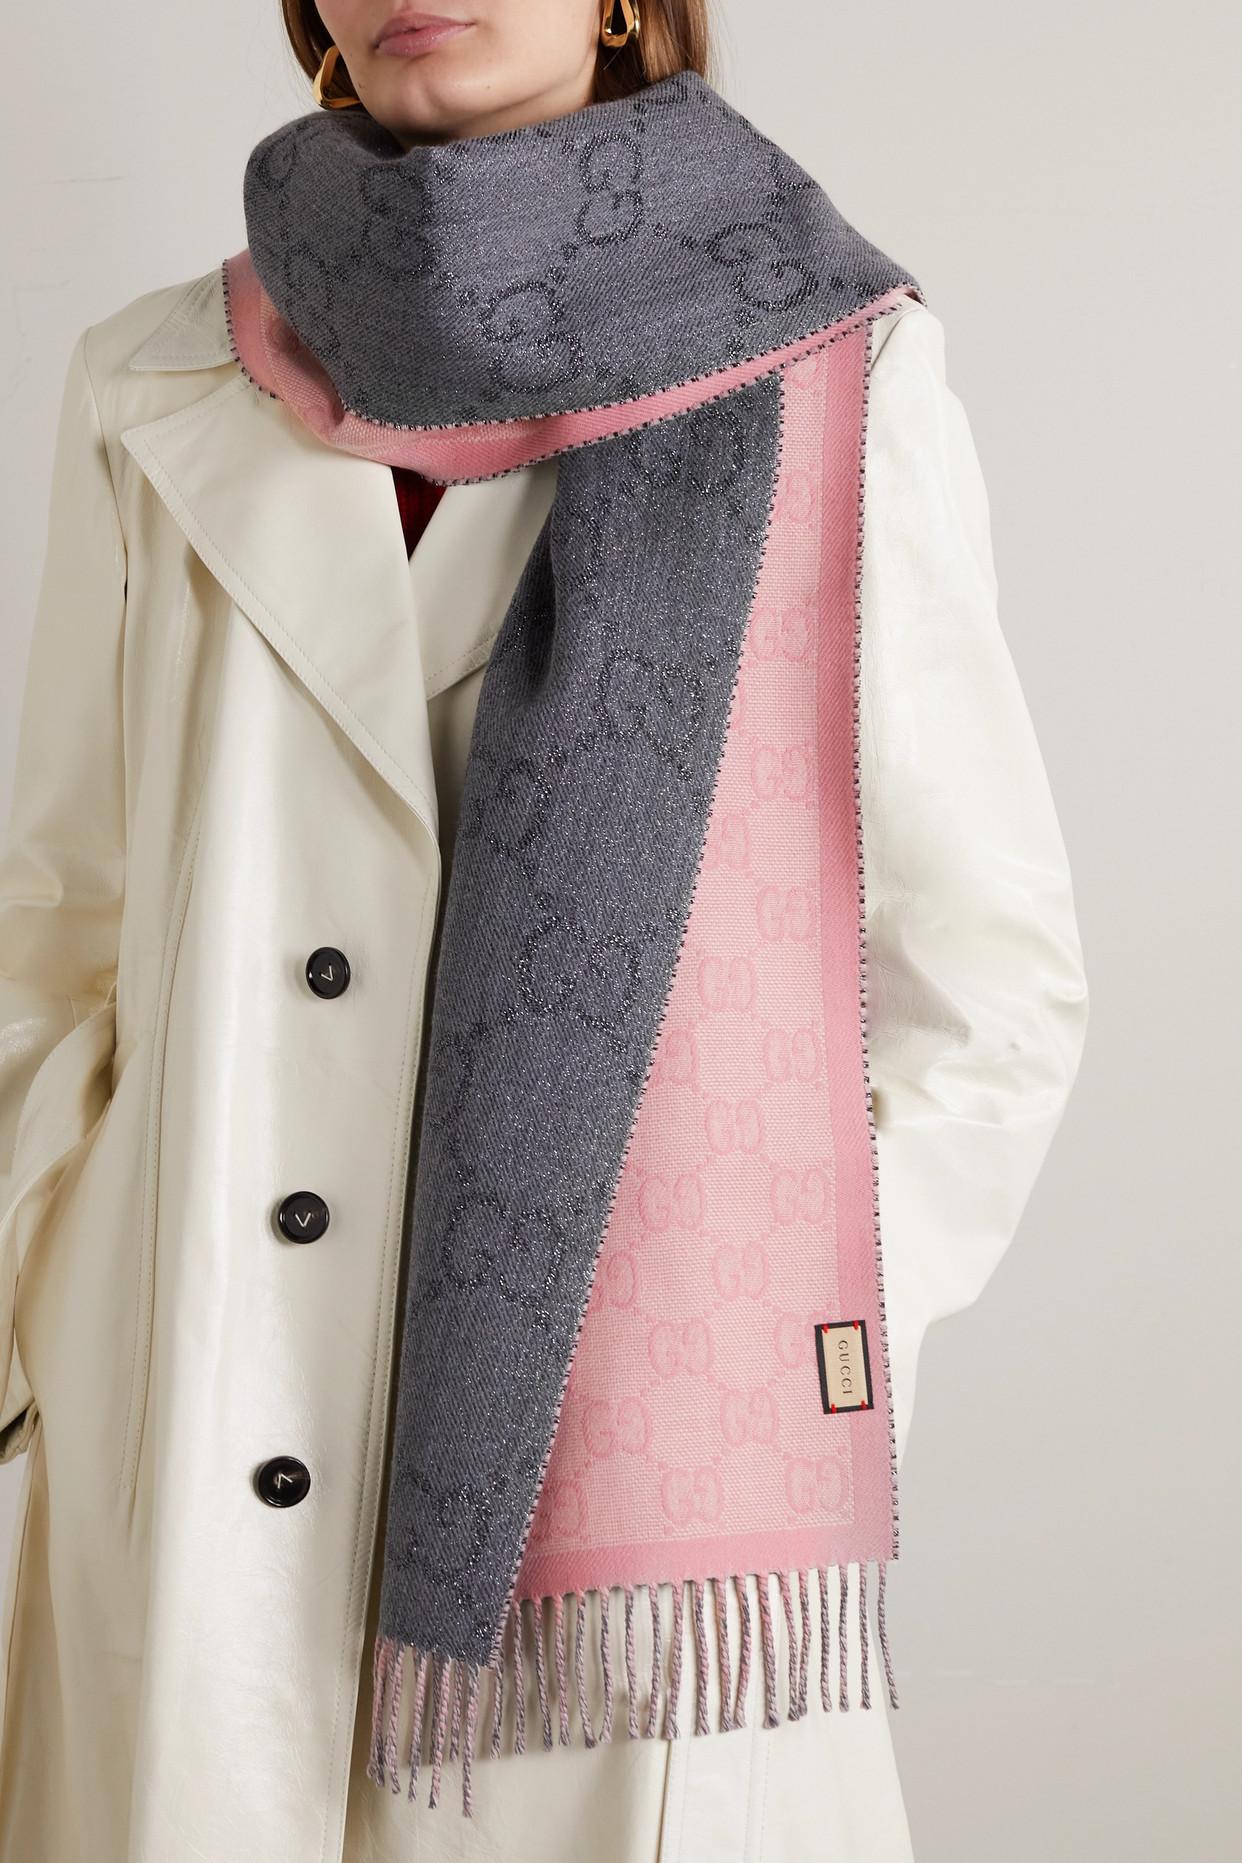 Guggenheim Museum Discipline snorkel Gucci Fringed Metallic Wool-blend Scarf in Pink | Lyst